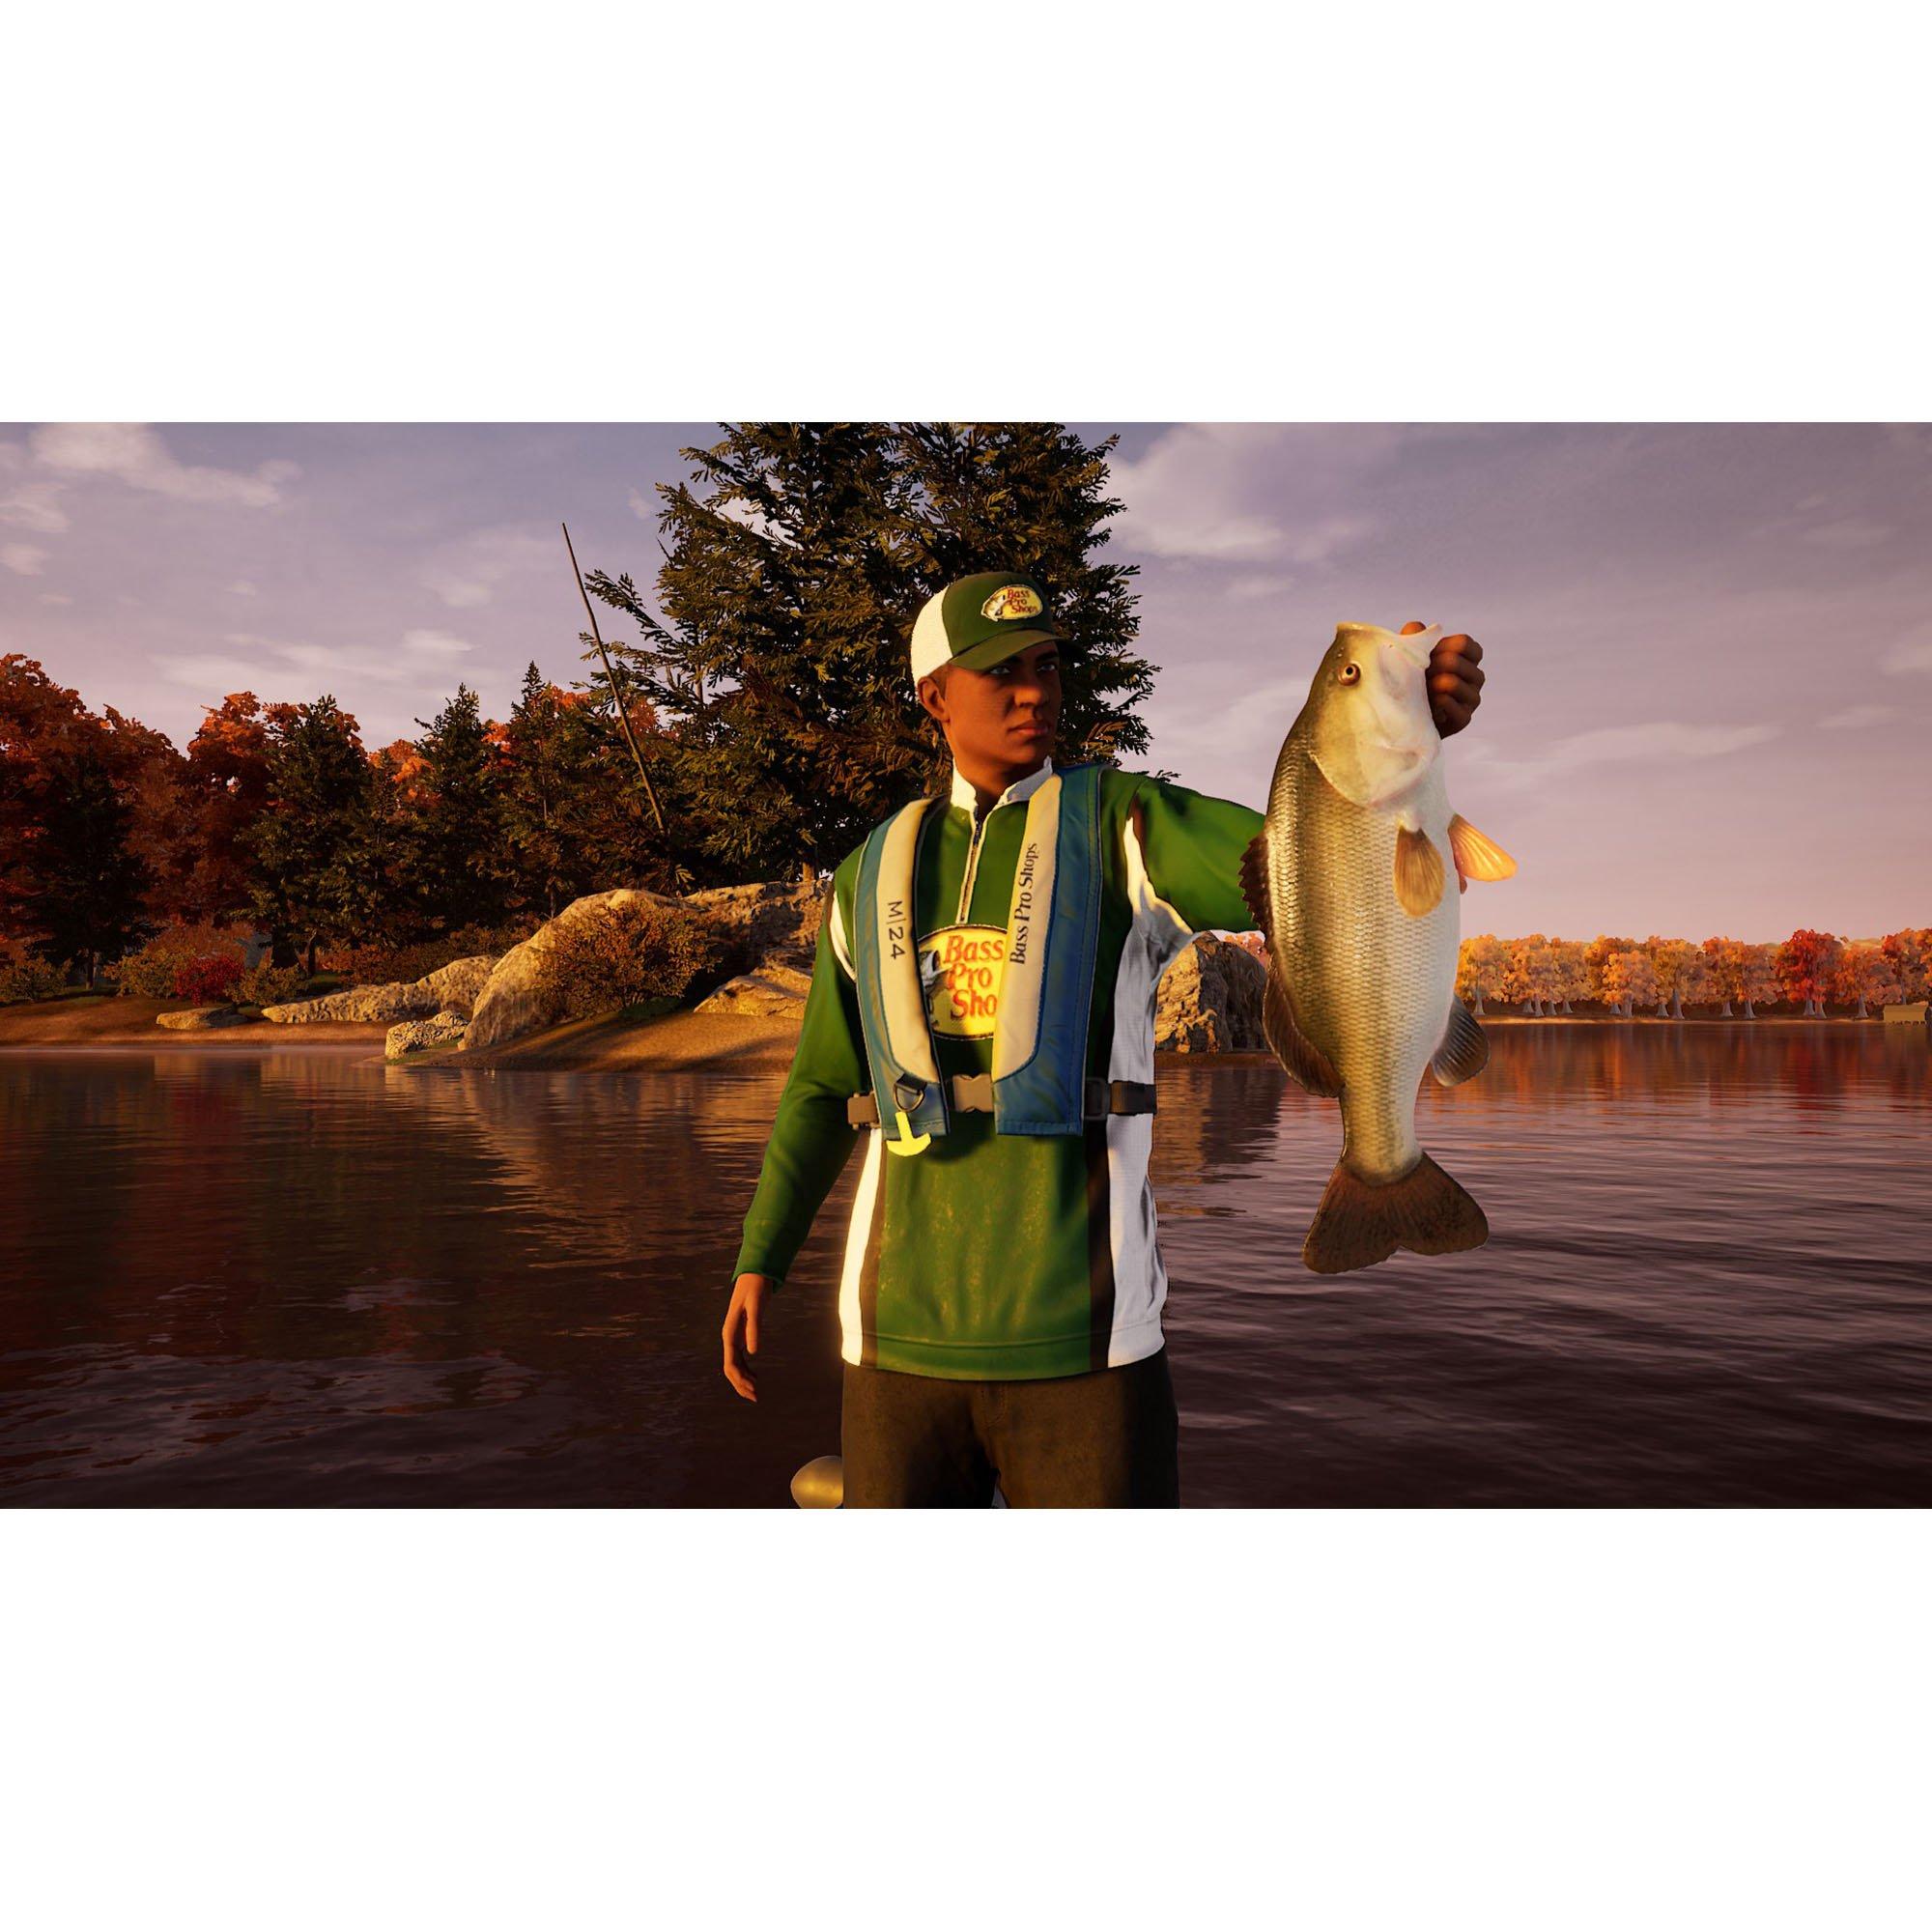 Fishing Sim World: Bass Pro Shops Edition - PlayStation 4